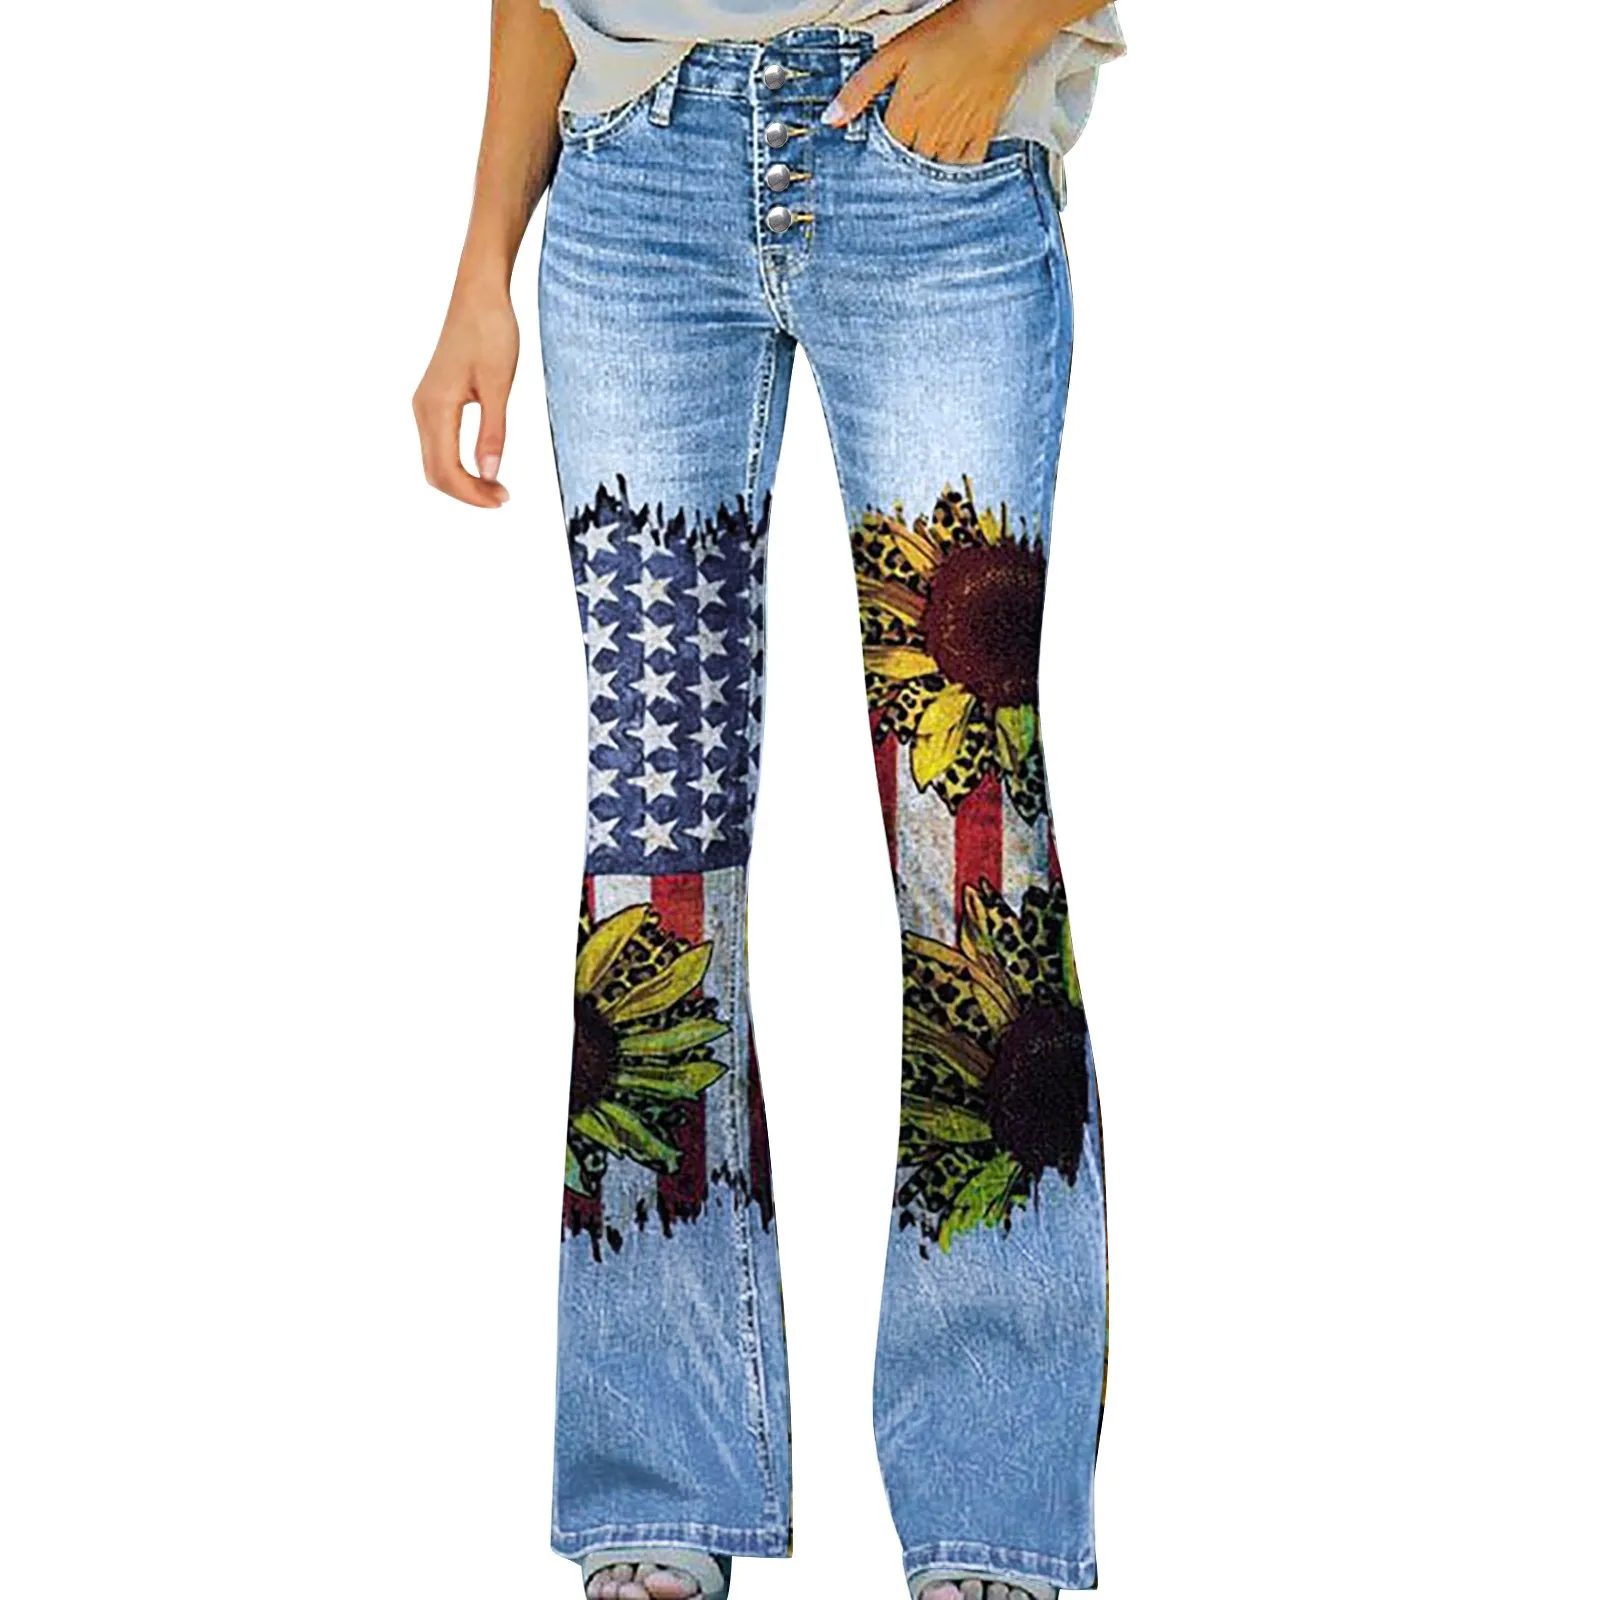 Y2k Streetwear Flared Pants Jeans for Women Flower Flag Print Distressed Bootcut Denim Pants Skinny Bell Bottom Pocket Trousers